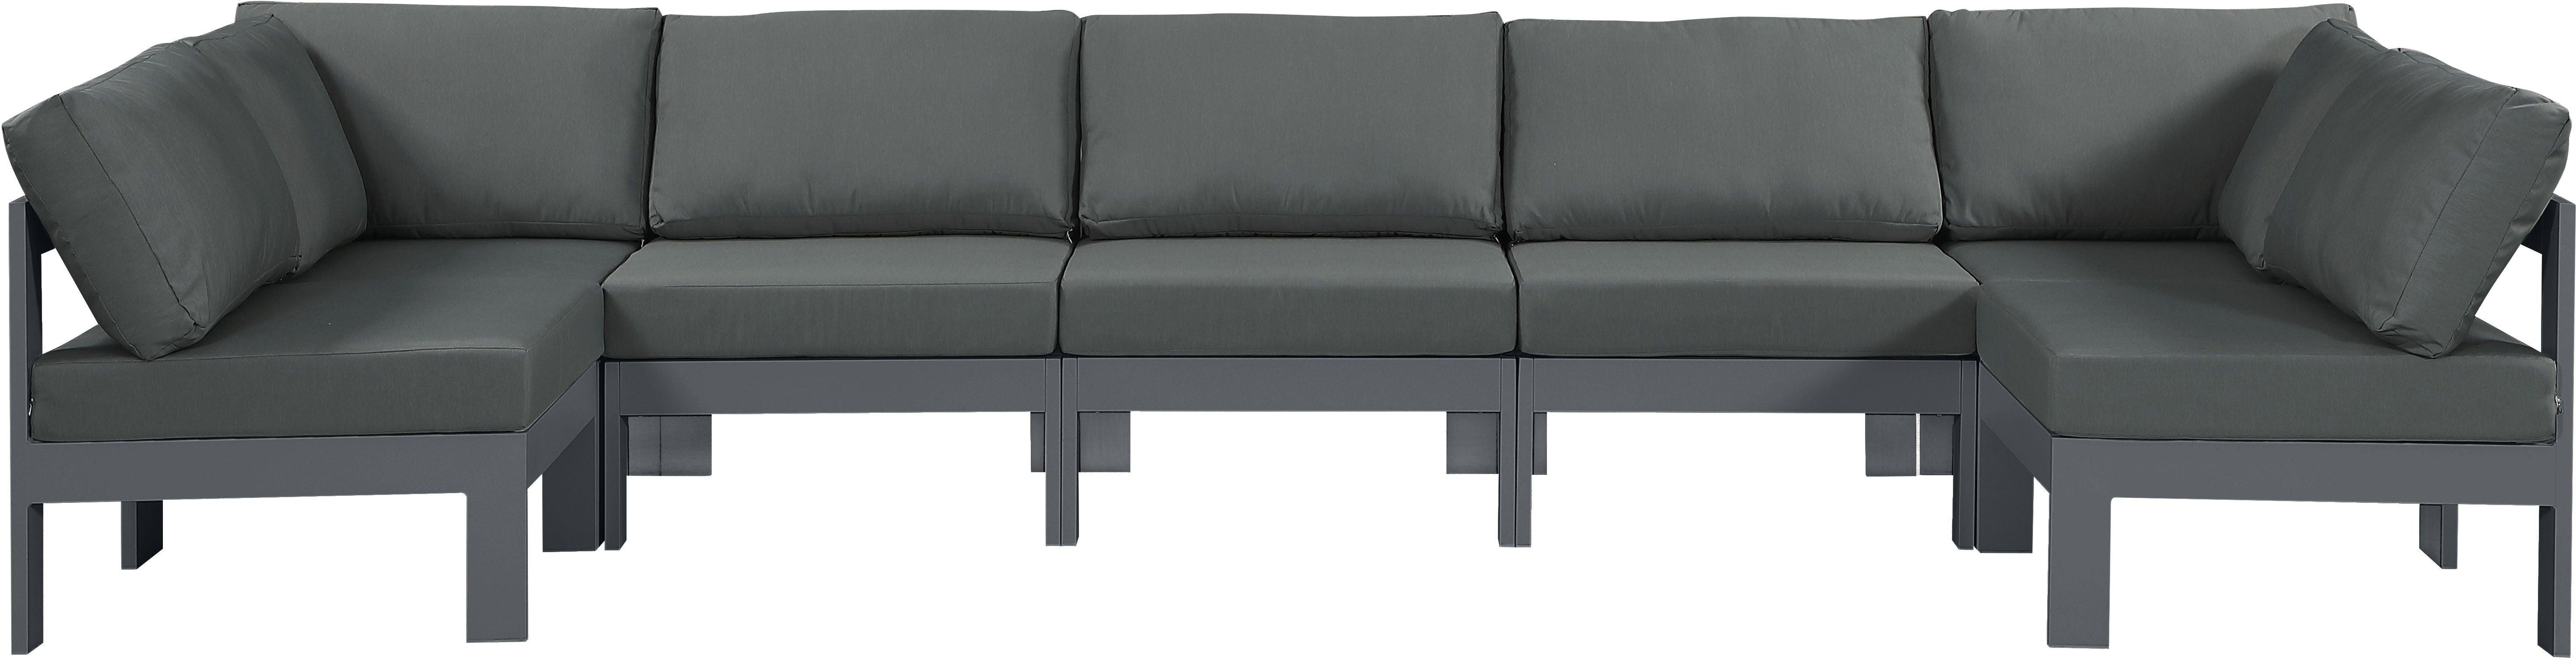 Meridian Furniture - Nizuc - Outdoor Patio Modular Sectional 7 Piece - Gray Dark - 5th Avenue Furniture